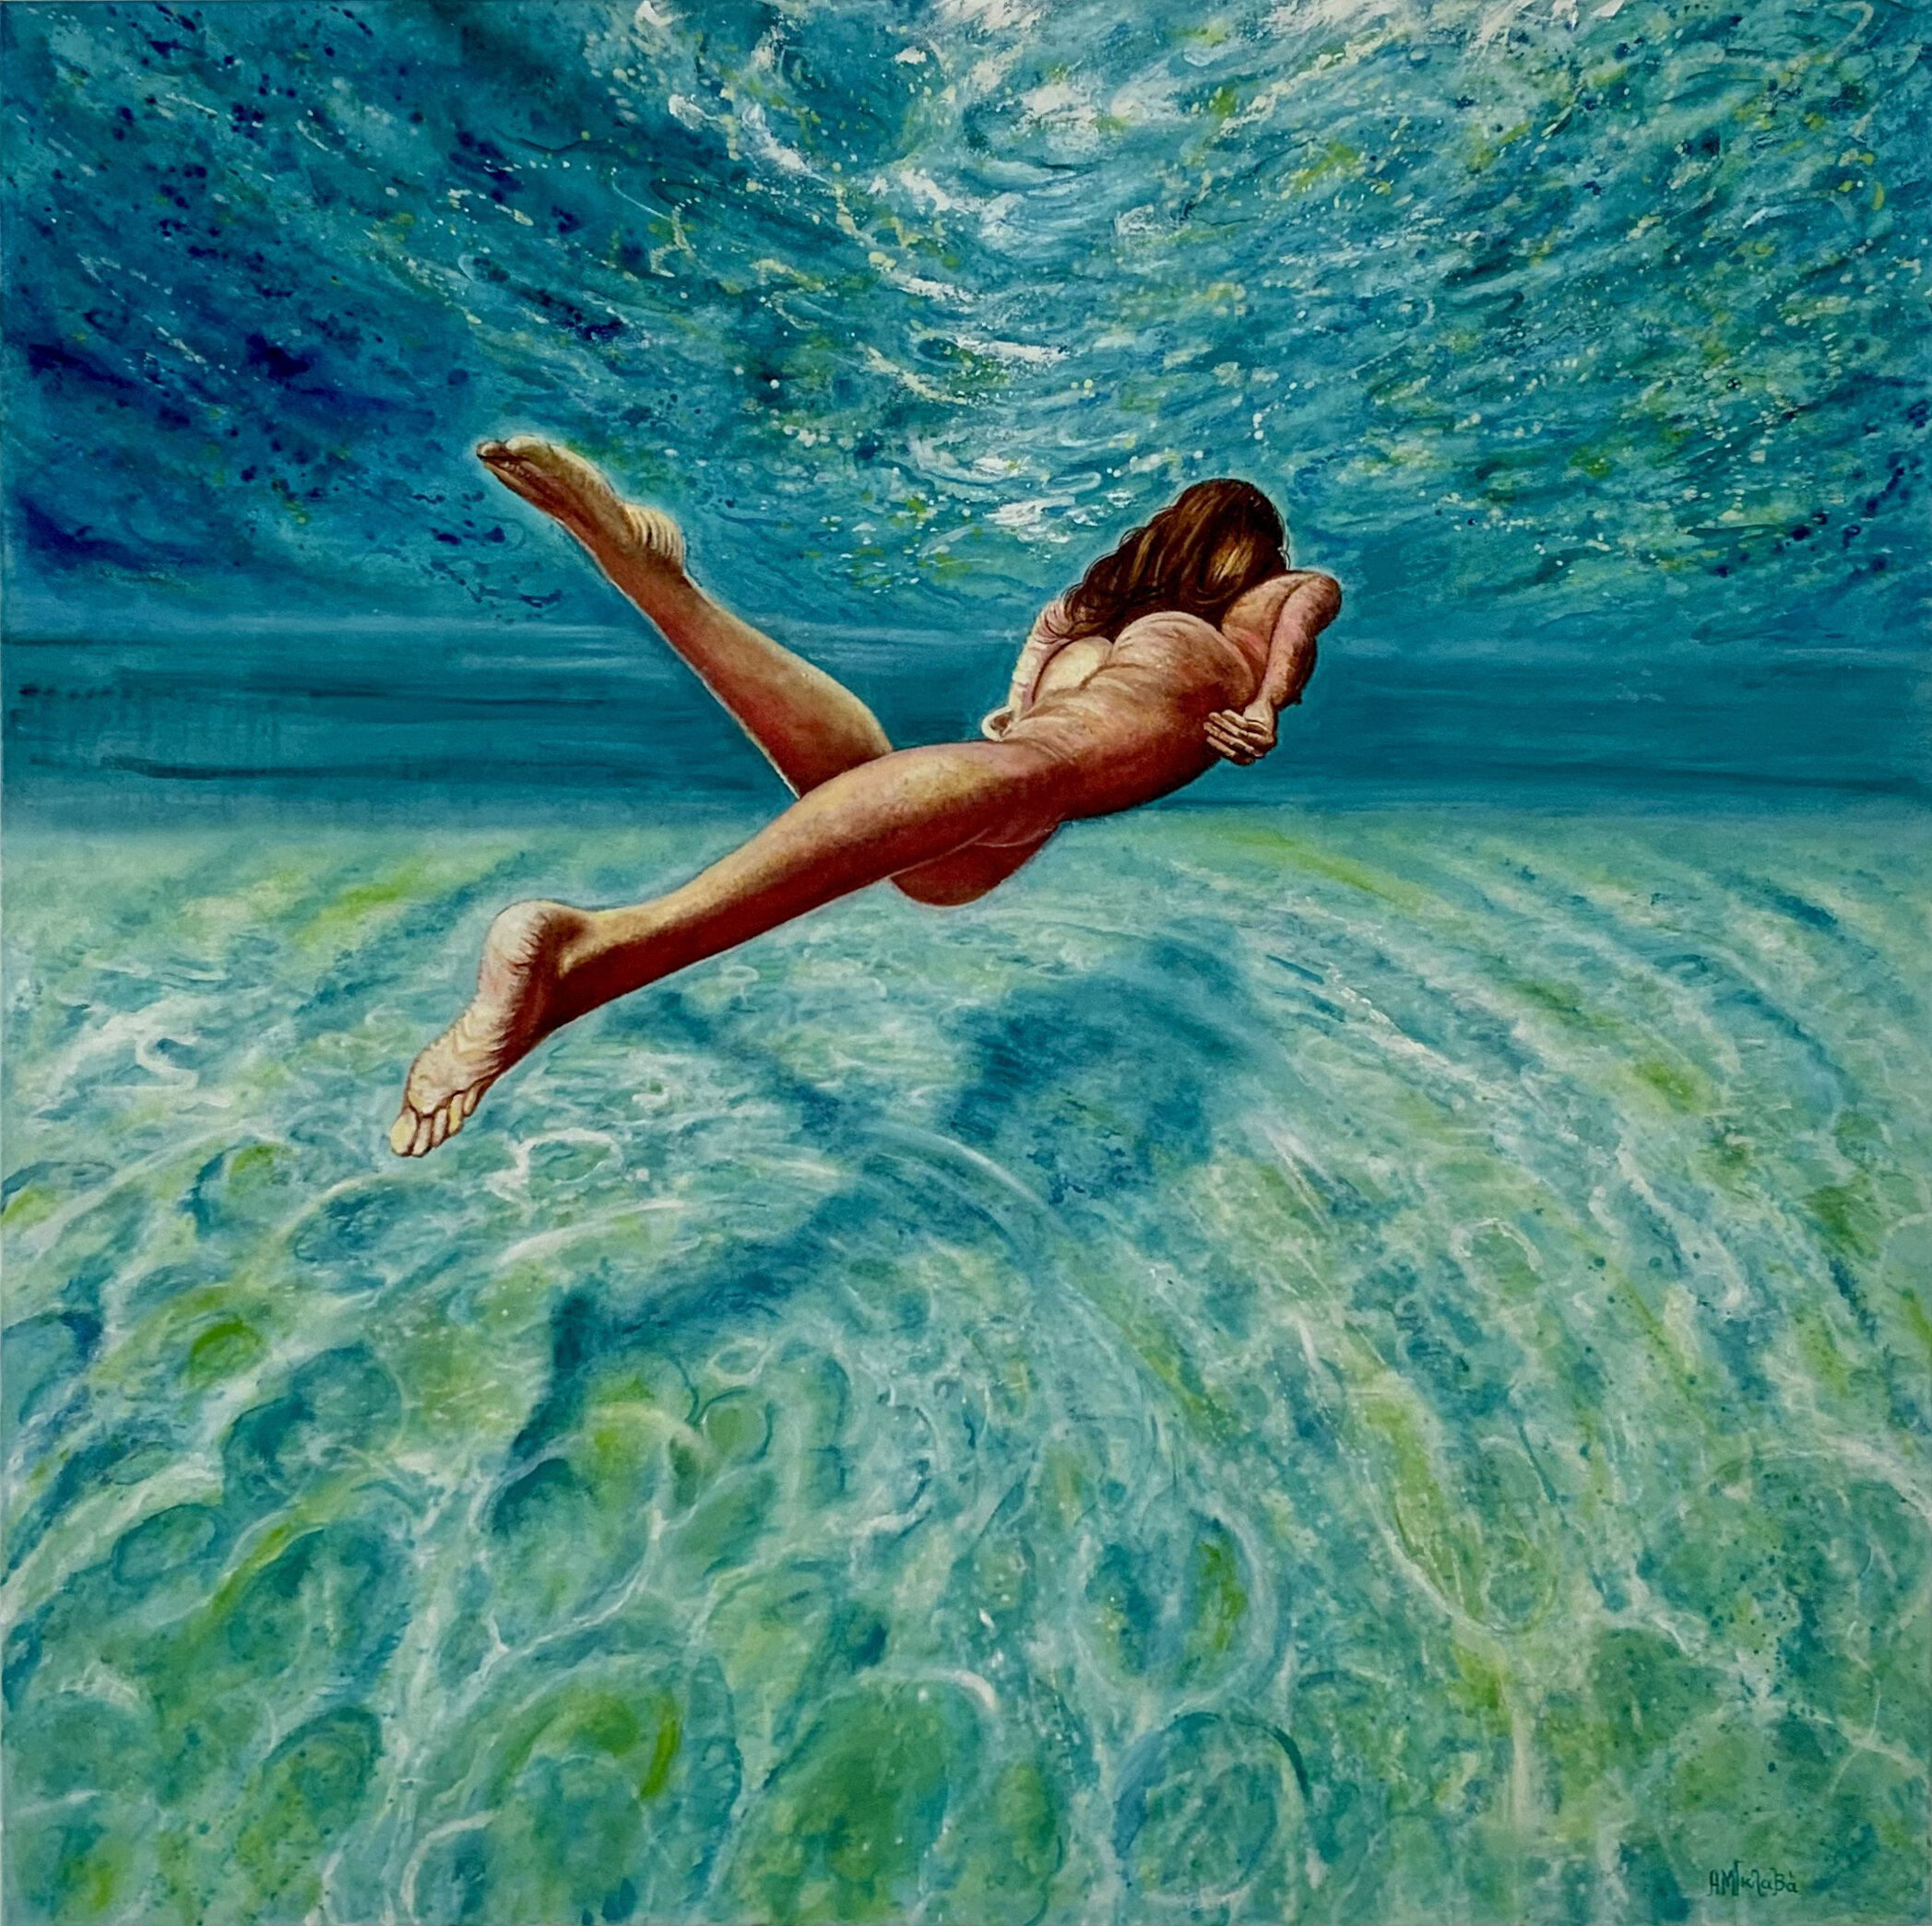  Anastasia Gklava -  Floating Weightlessly  - Oil on canvas - Dim: 39x39 in / 100x100 cm  